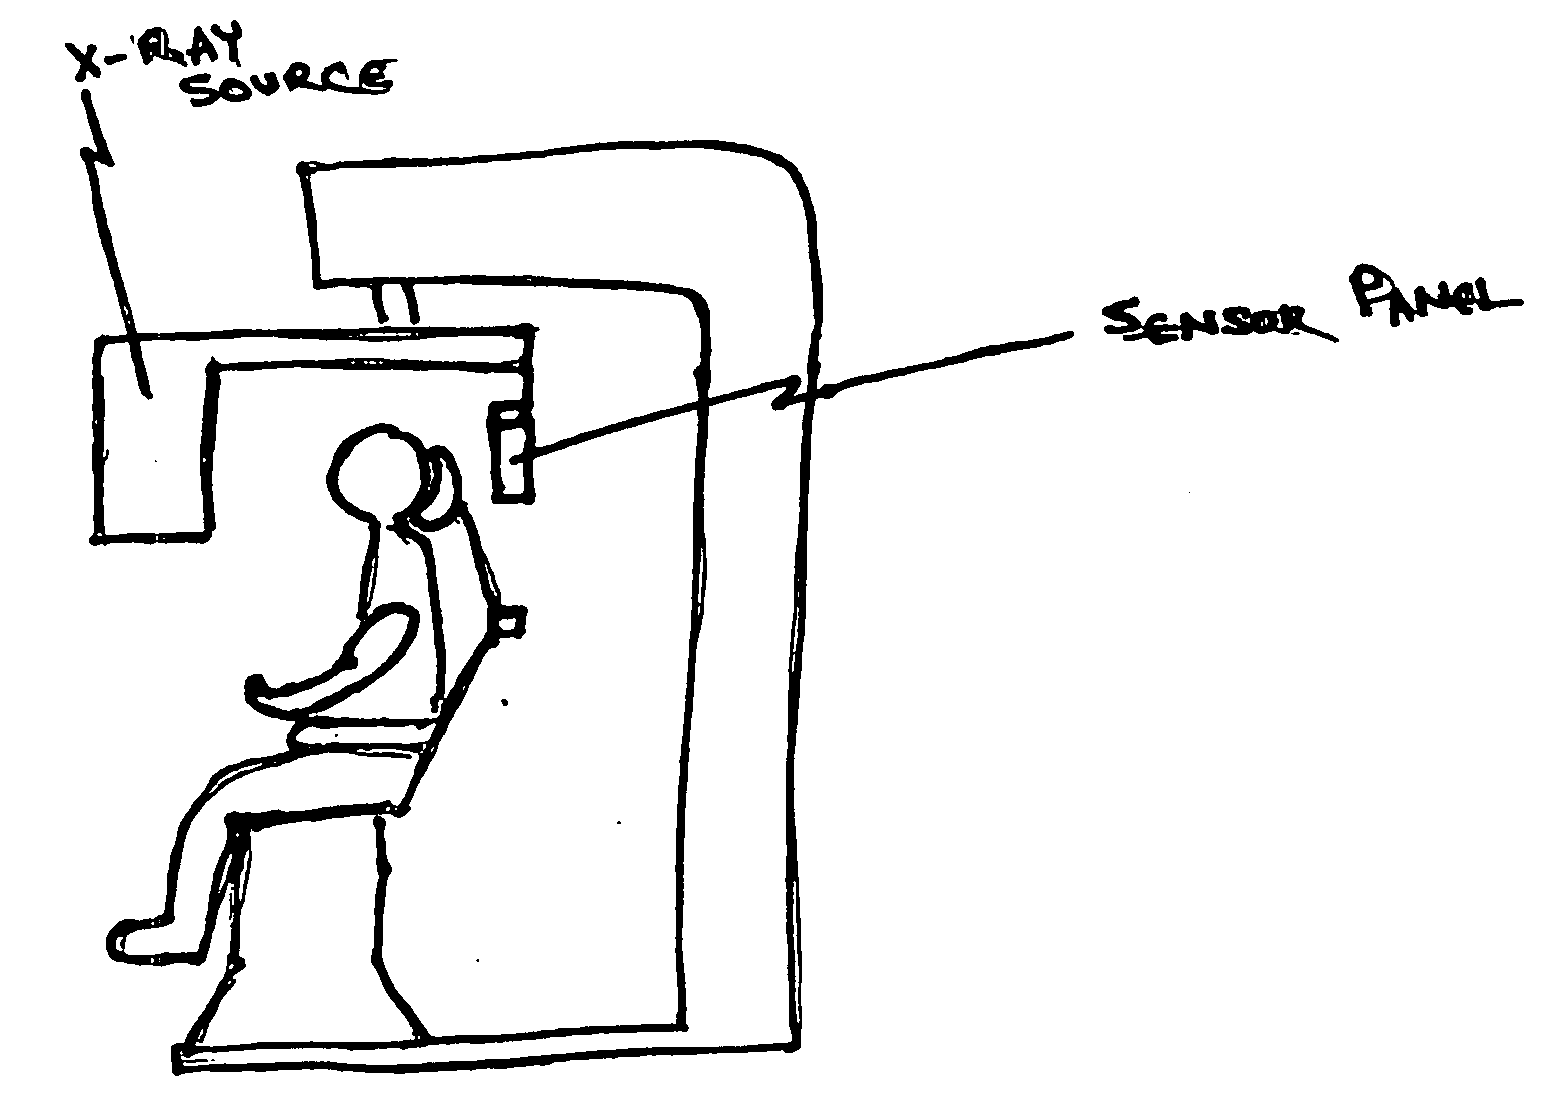 Multi-use CT scanning apparatus